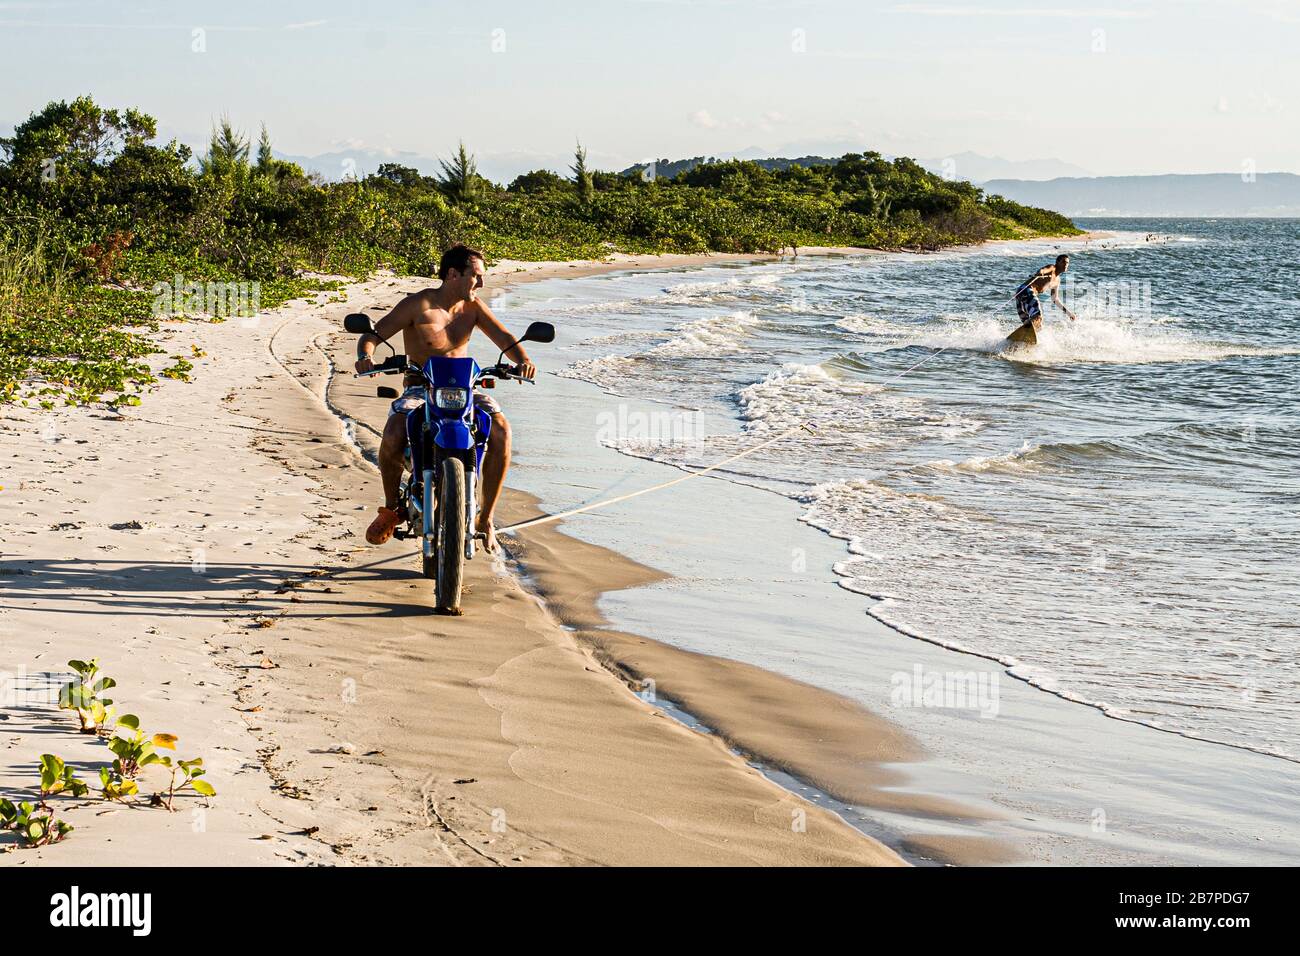 Moto trainando un surfista a Daniela Beach. Florianopolis, Santa Catarina, Brasile. Foto Stock